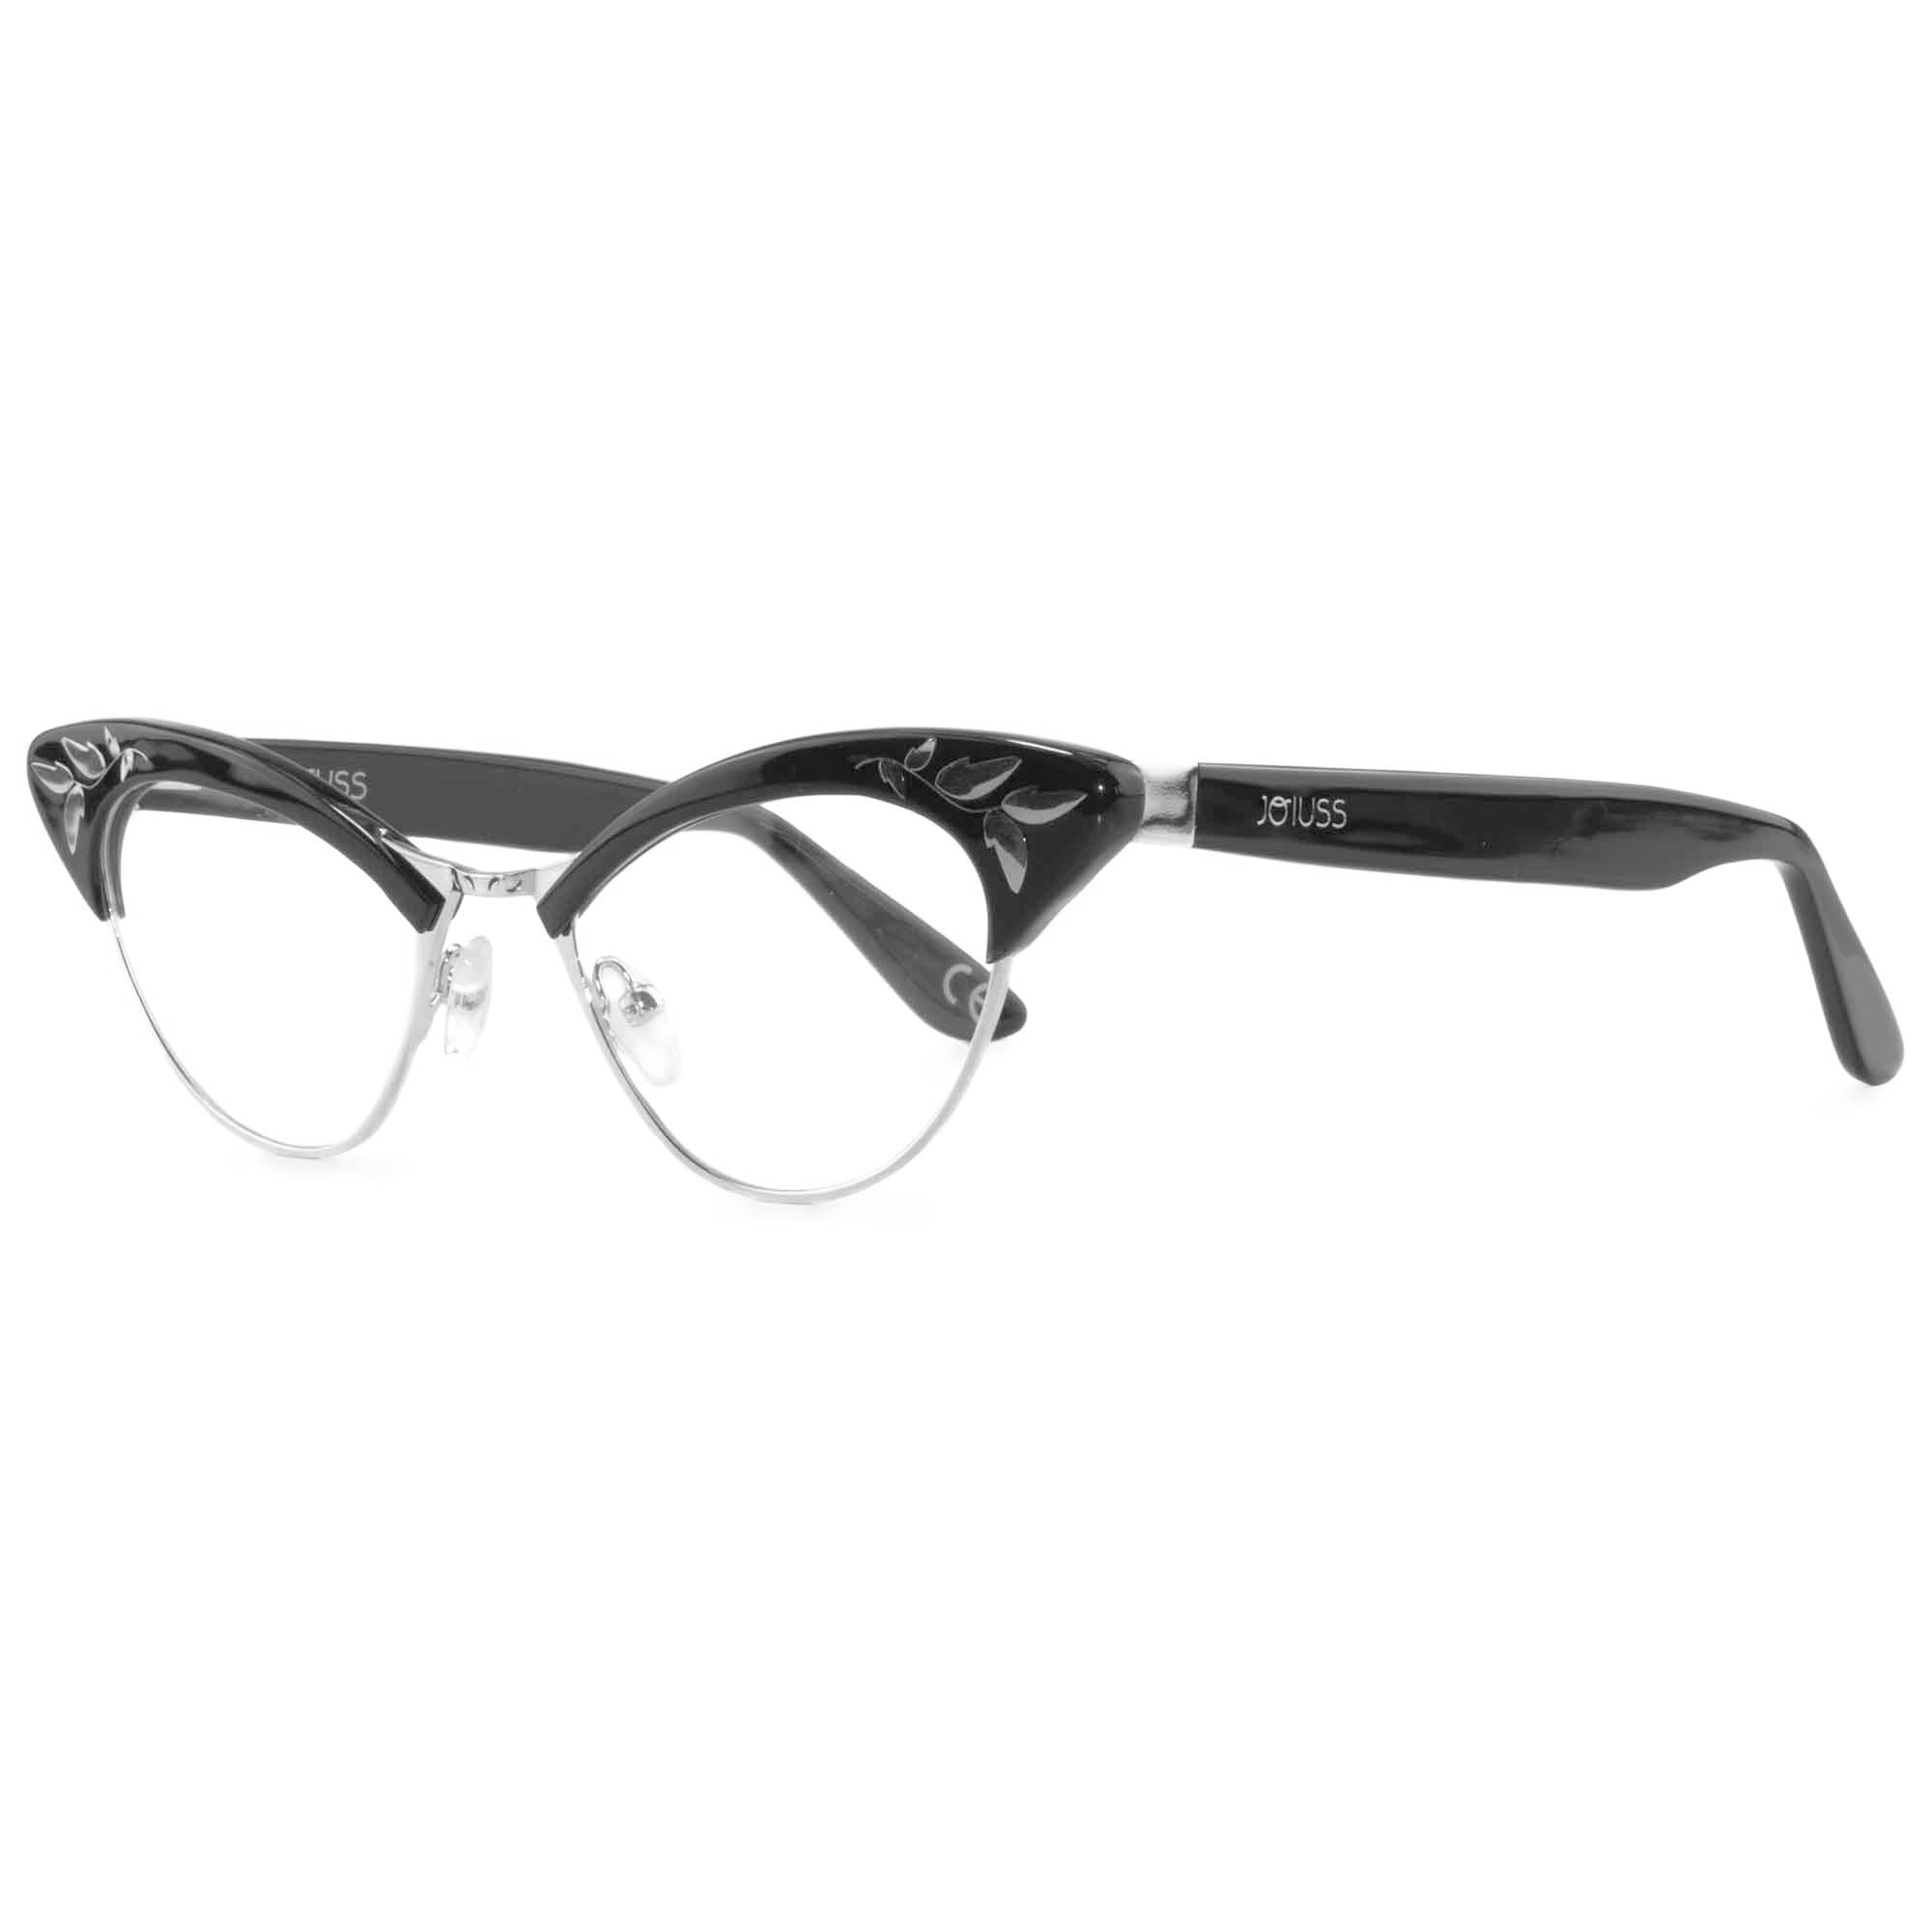 Cat Eye Glasses - Black & Silver - Rita